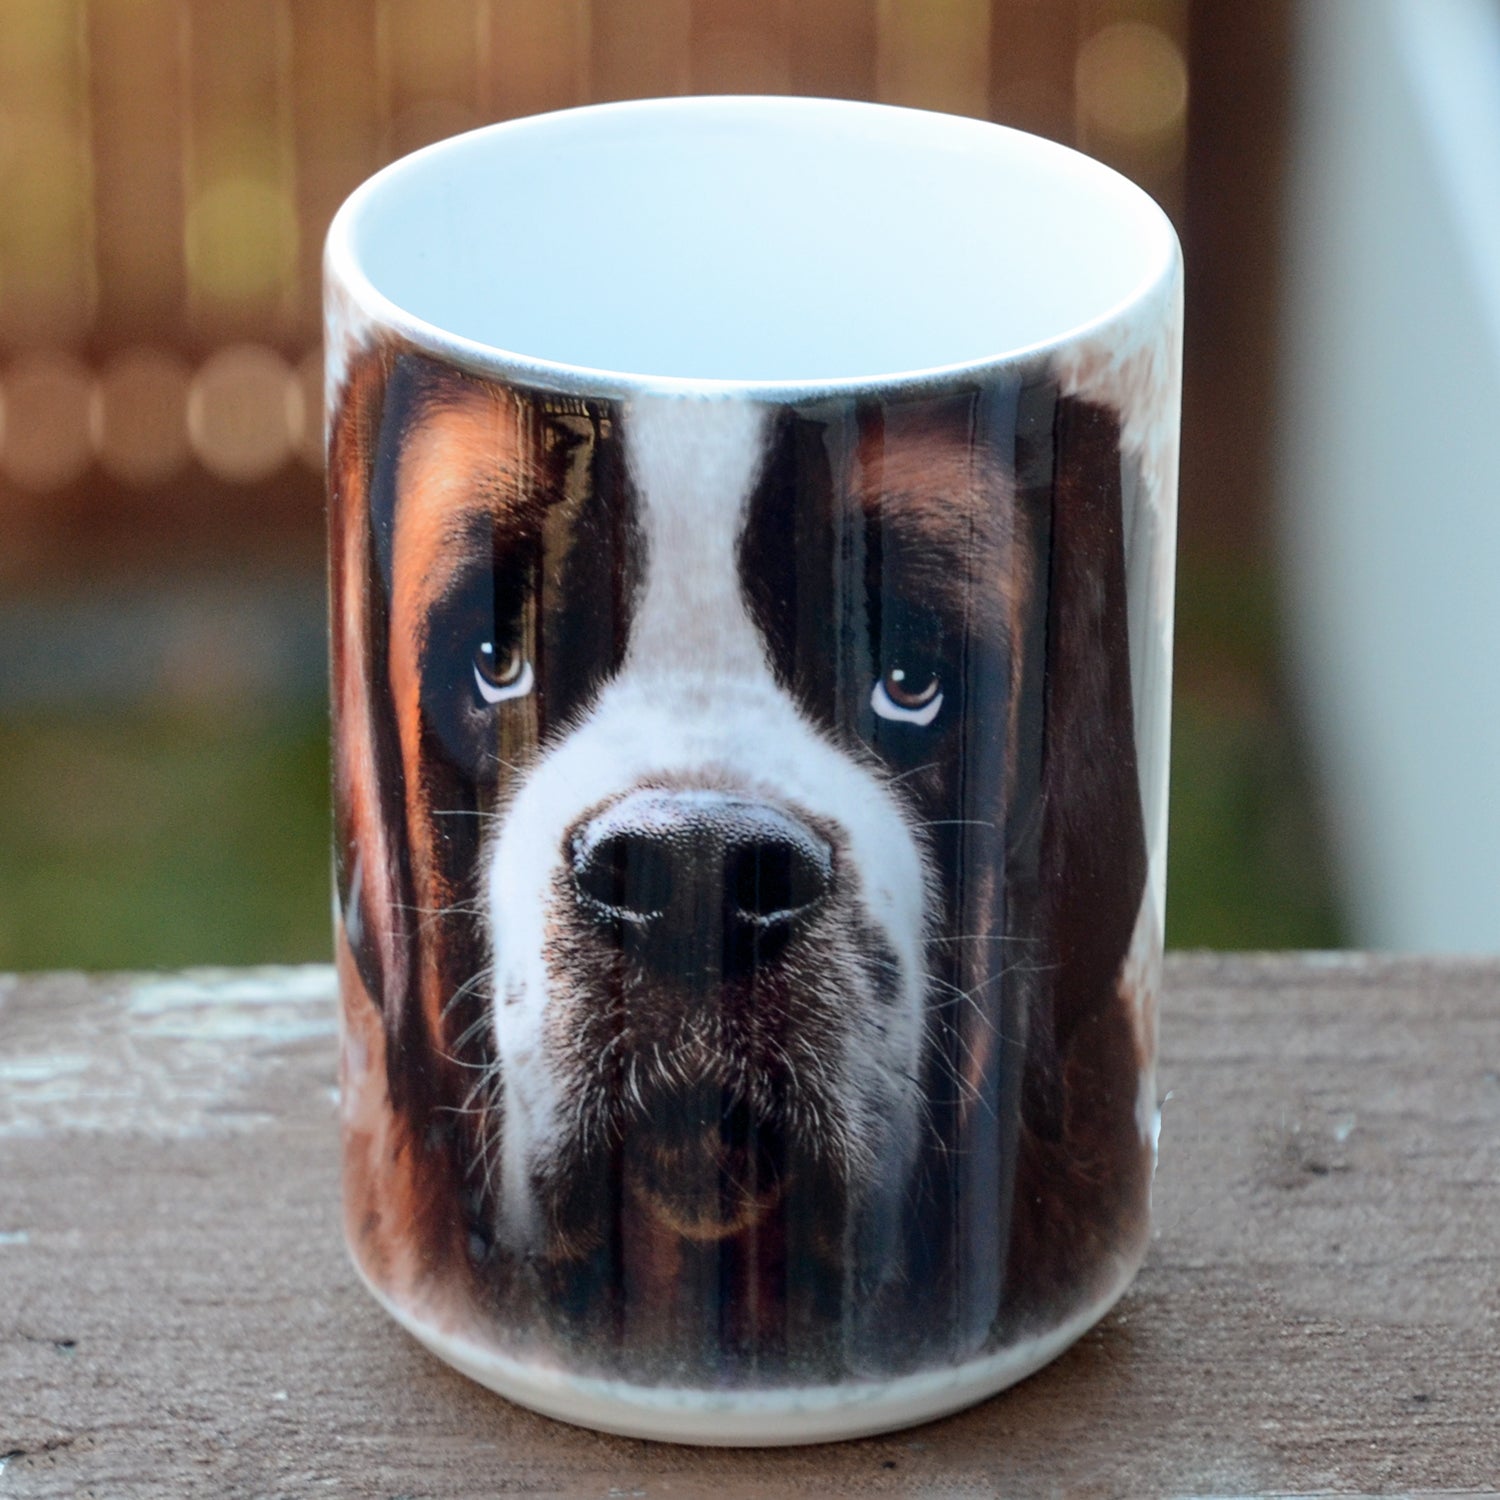 "Saint Bernard Face Ceramic Mug"